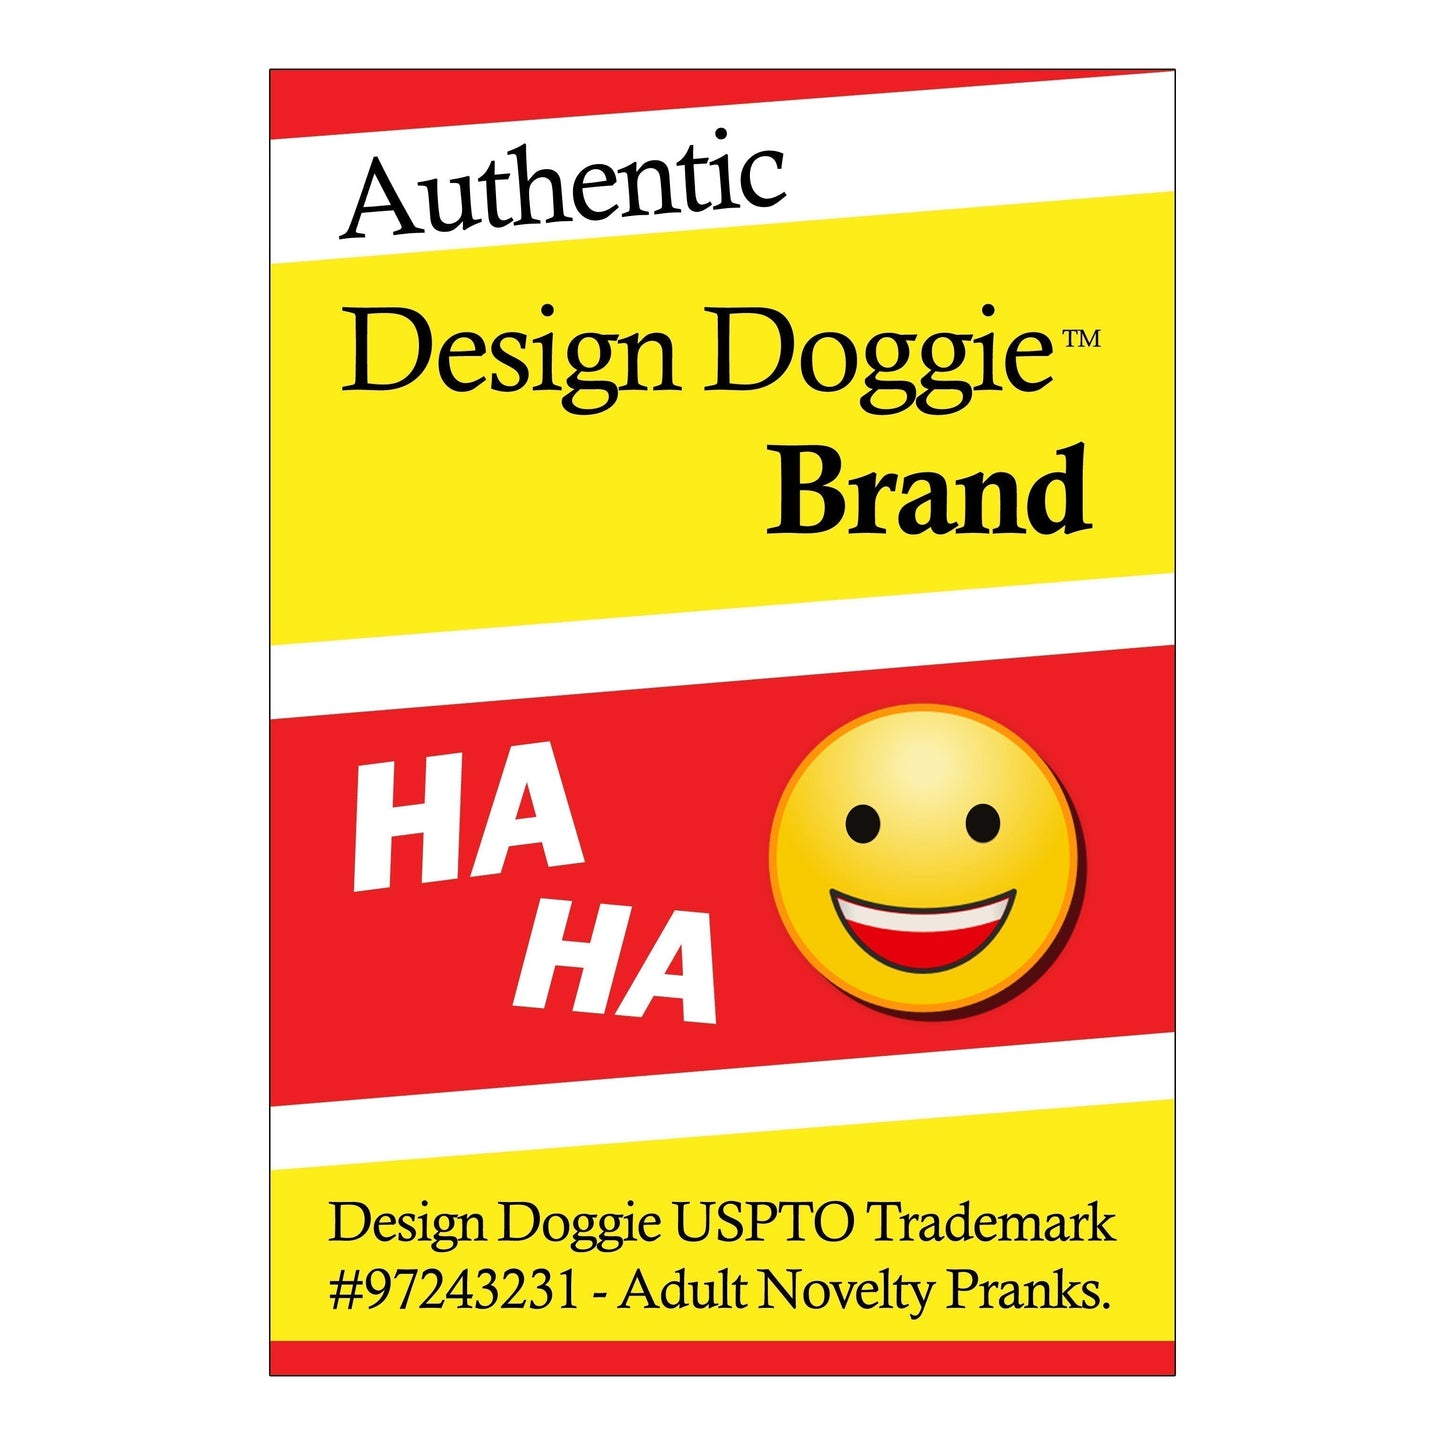 Turd Design Doggie Brand